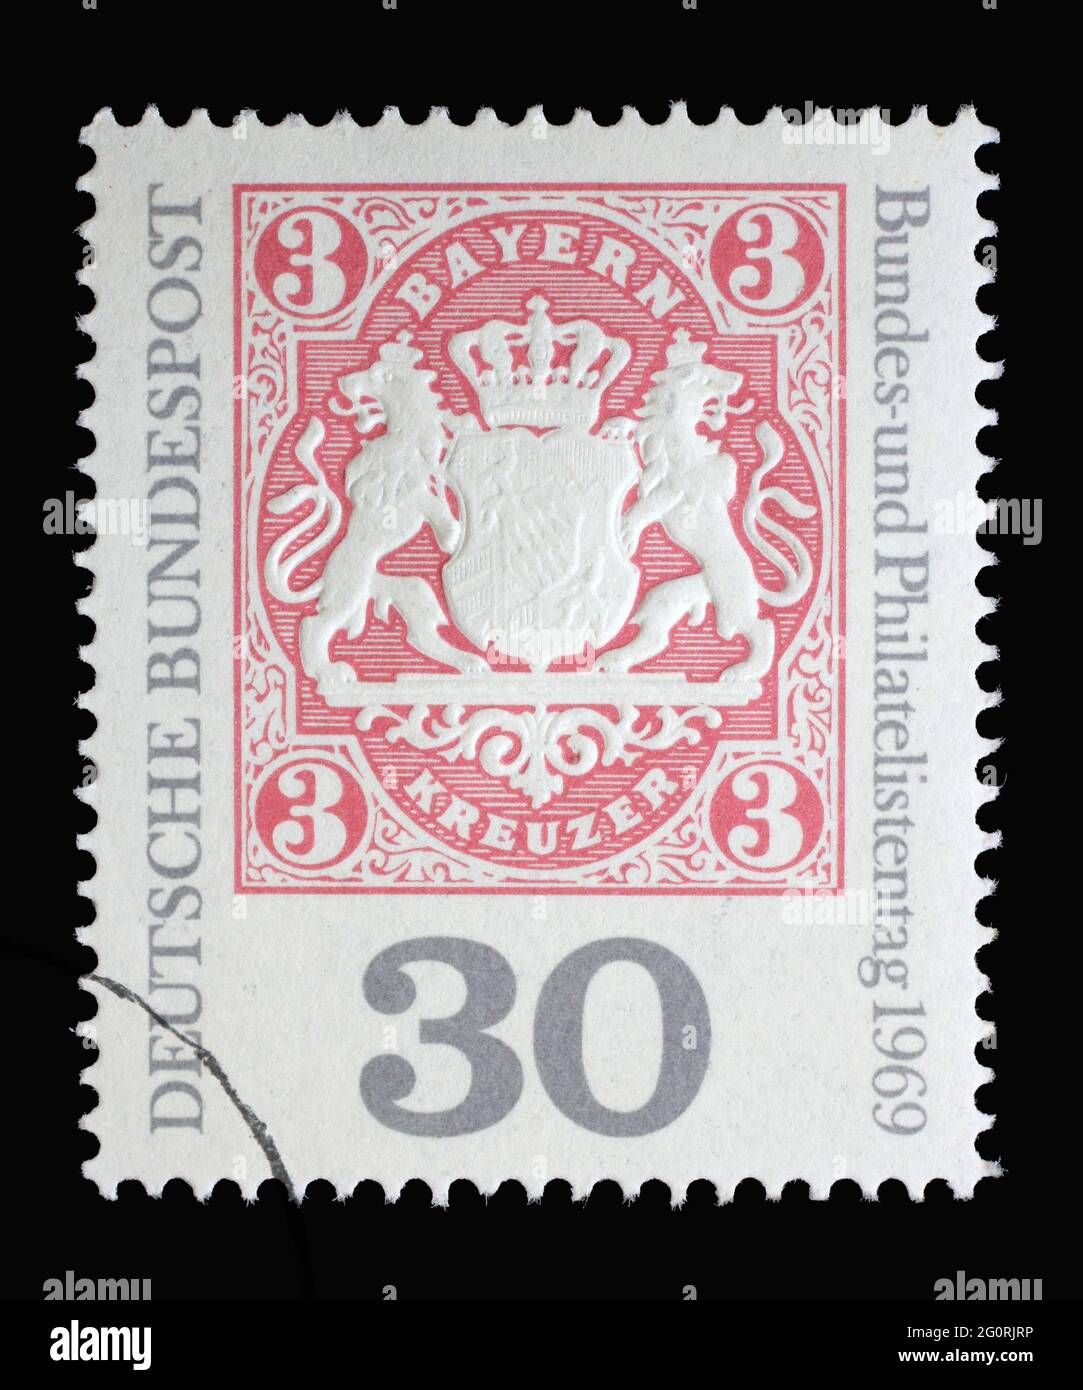 Stamp printed in Germany shows Bayern stamp 3kr, Philatelist day, German Philatelic Federation Congress and Exhibition in Garmisch, circa 1969 Stock Photo